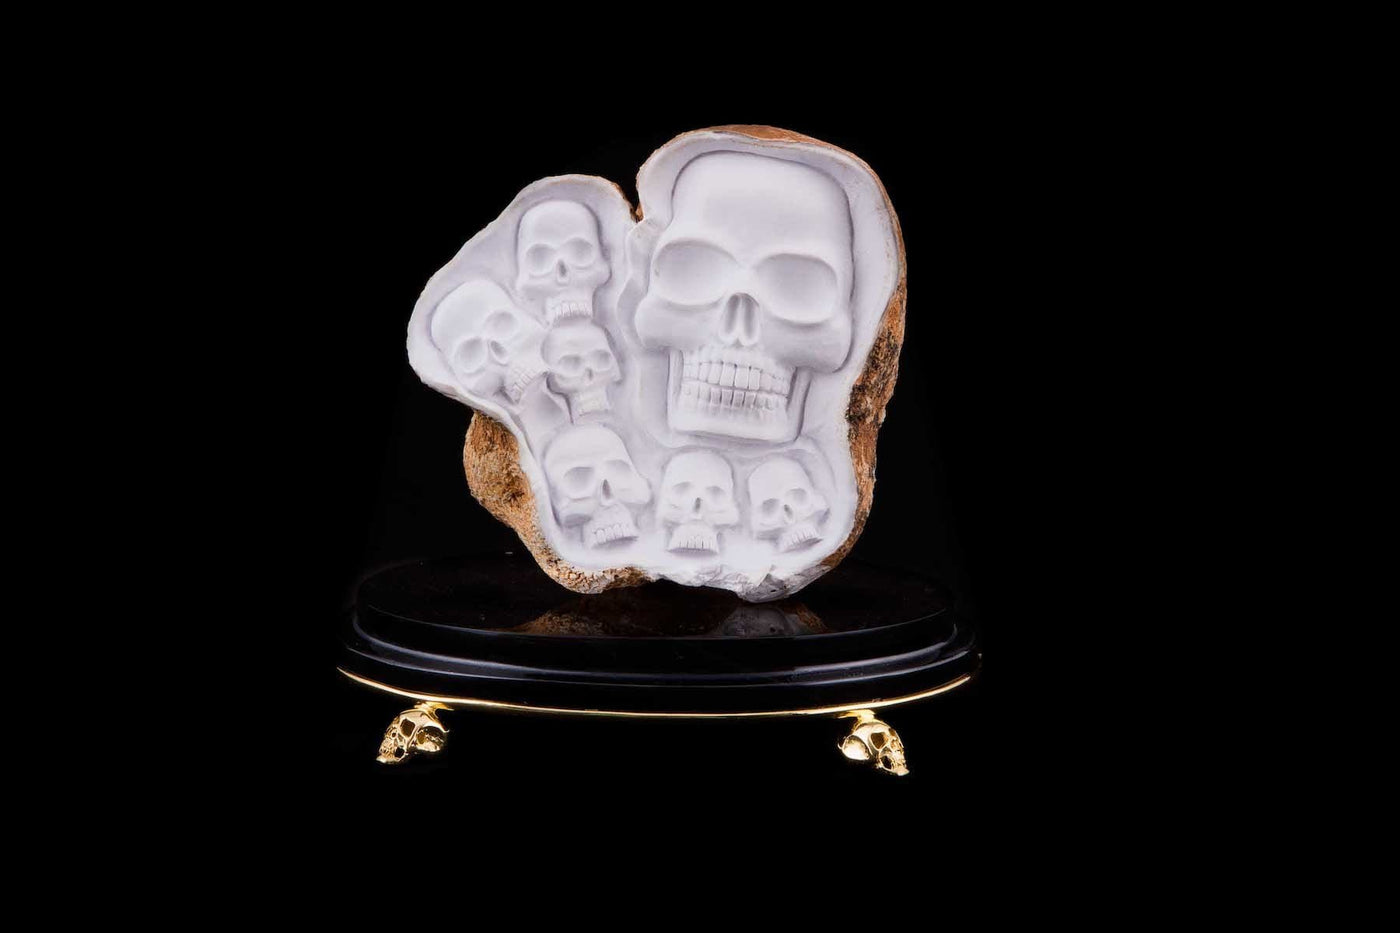 Agate Skull Statue: "Catacomb" - Surround Art & Diamonds Sculpture by L'Aquart